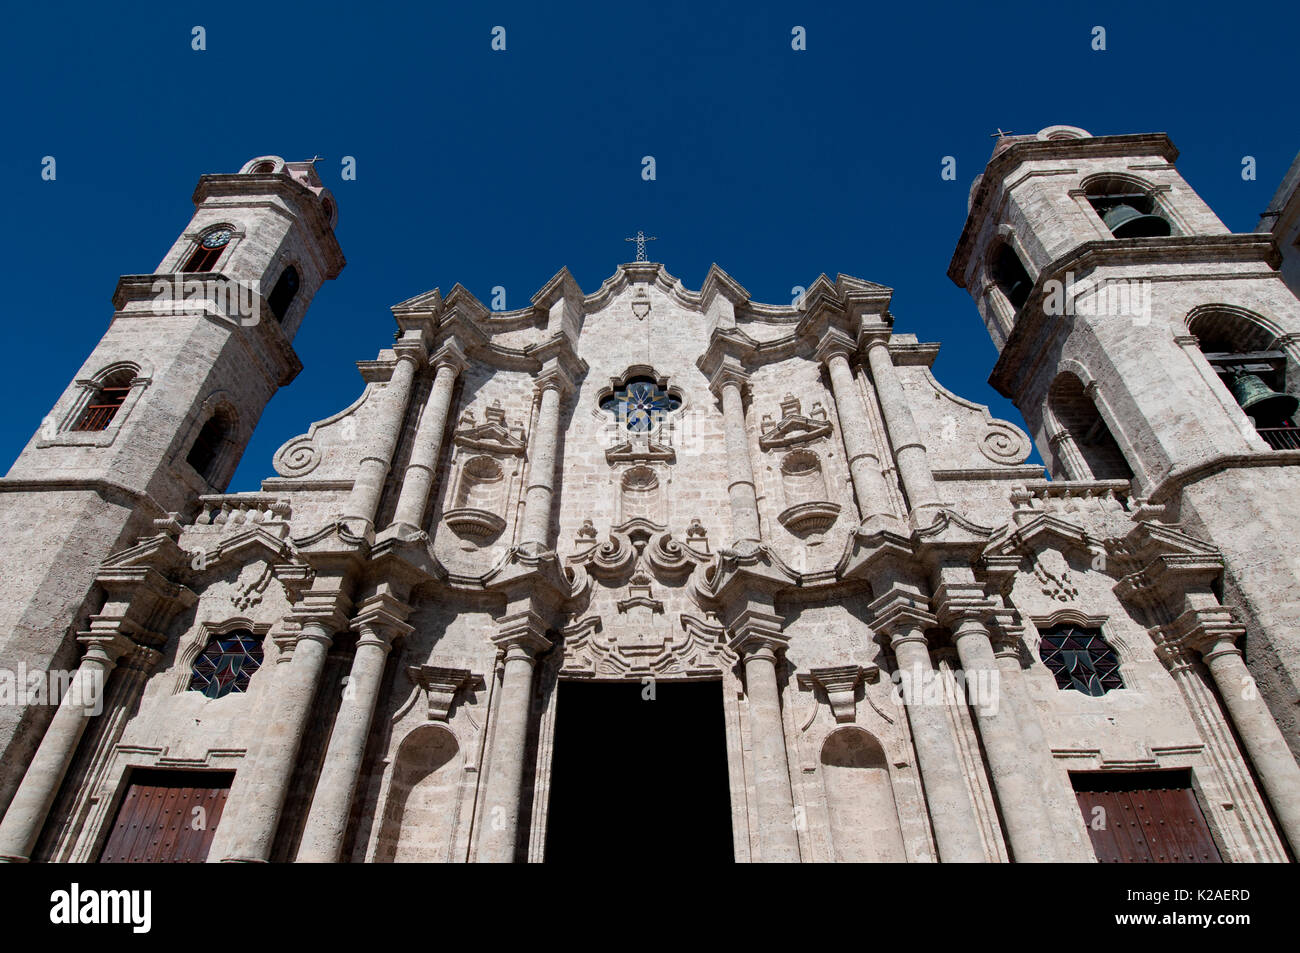 Die Catedral de la Habana (Kathedrale von Havanna) in Havanna, Kuba Stockfoto